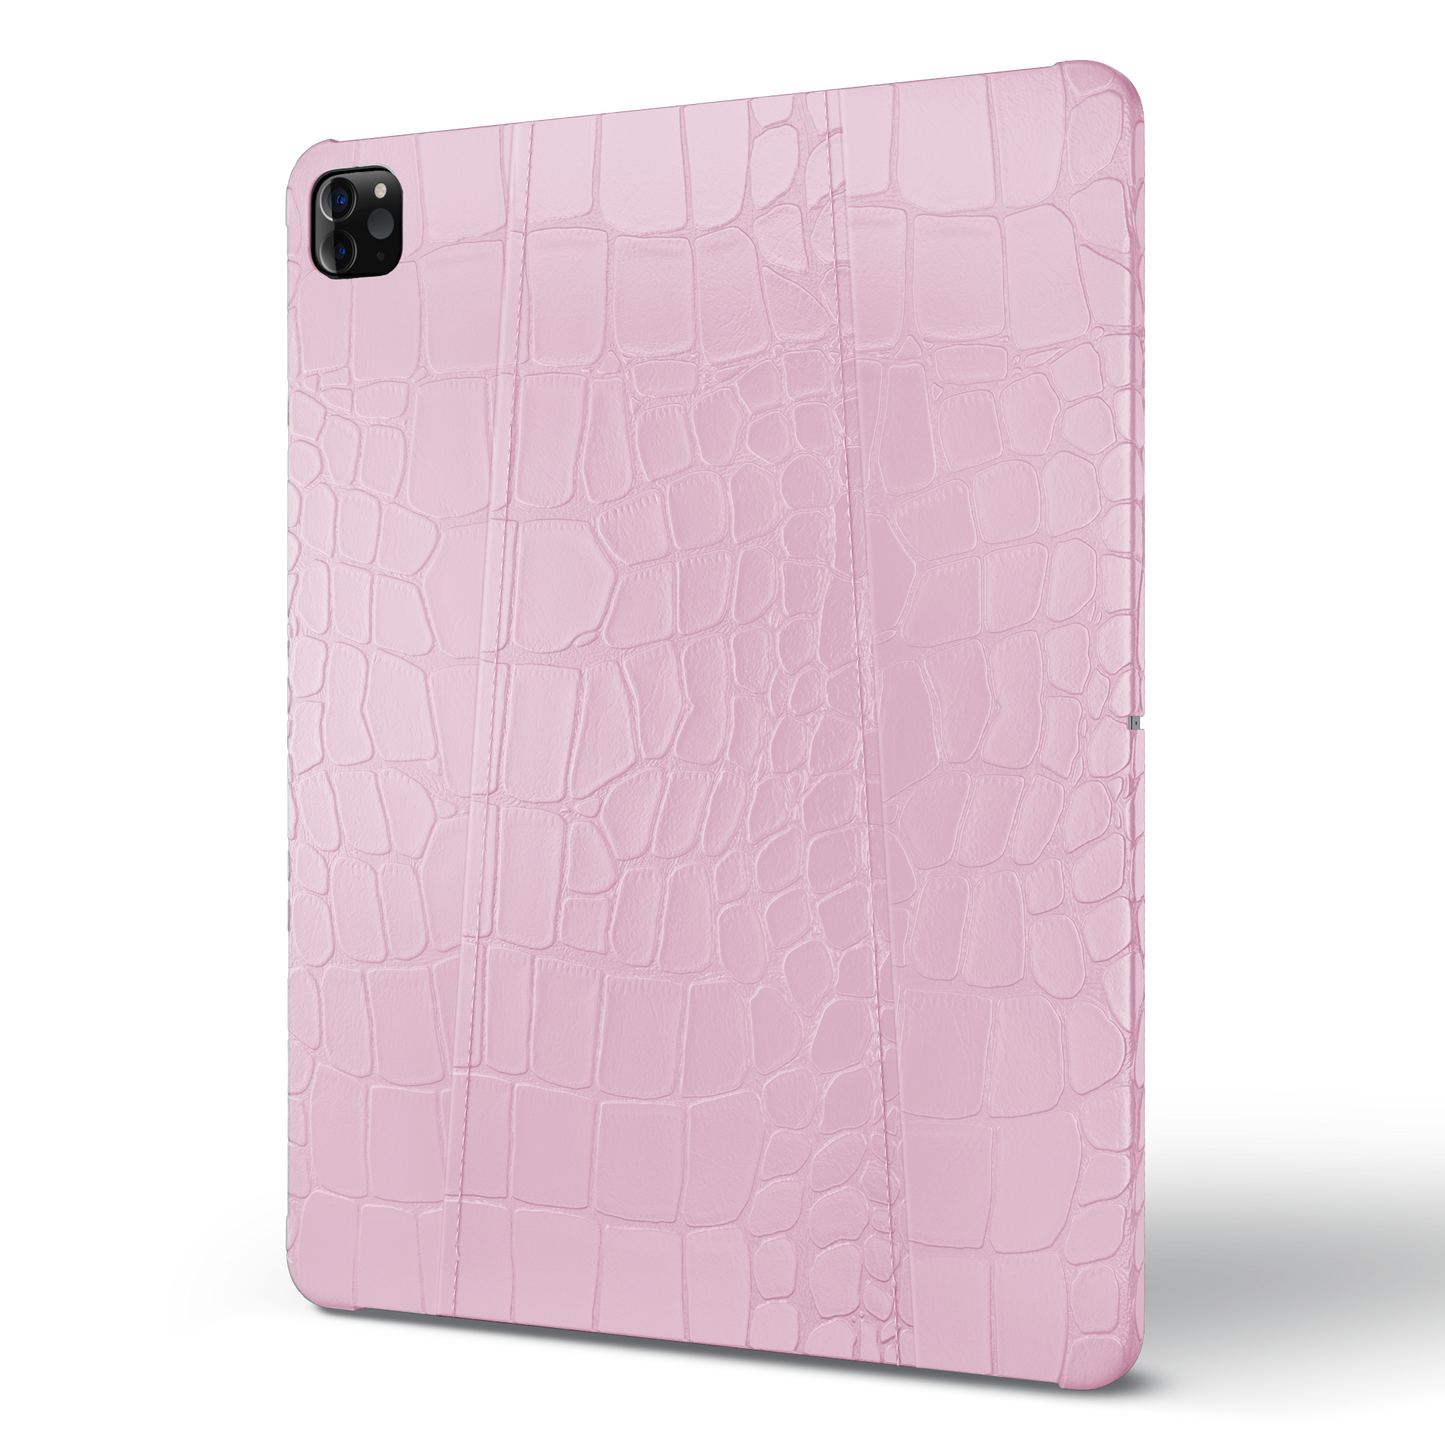 Ipad Pro (2nd-3rd-4th Gen) 11-inch Pink Alligator Case